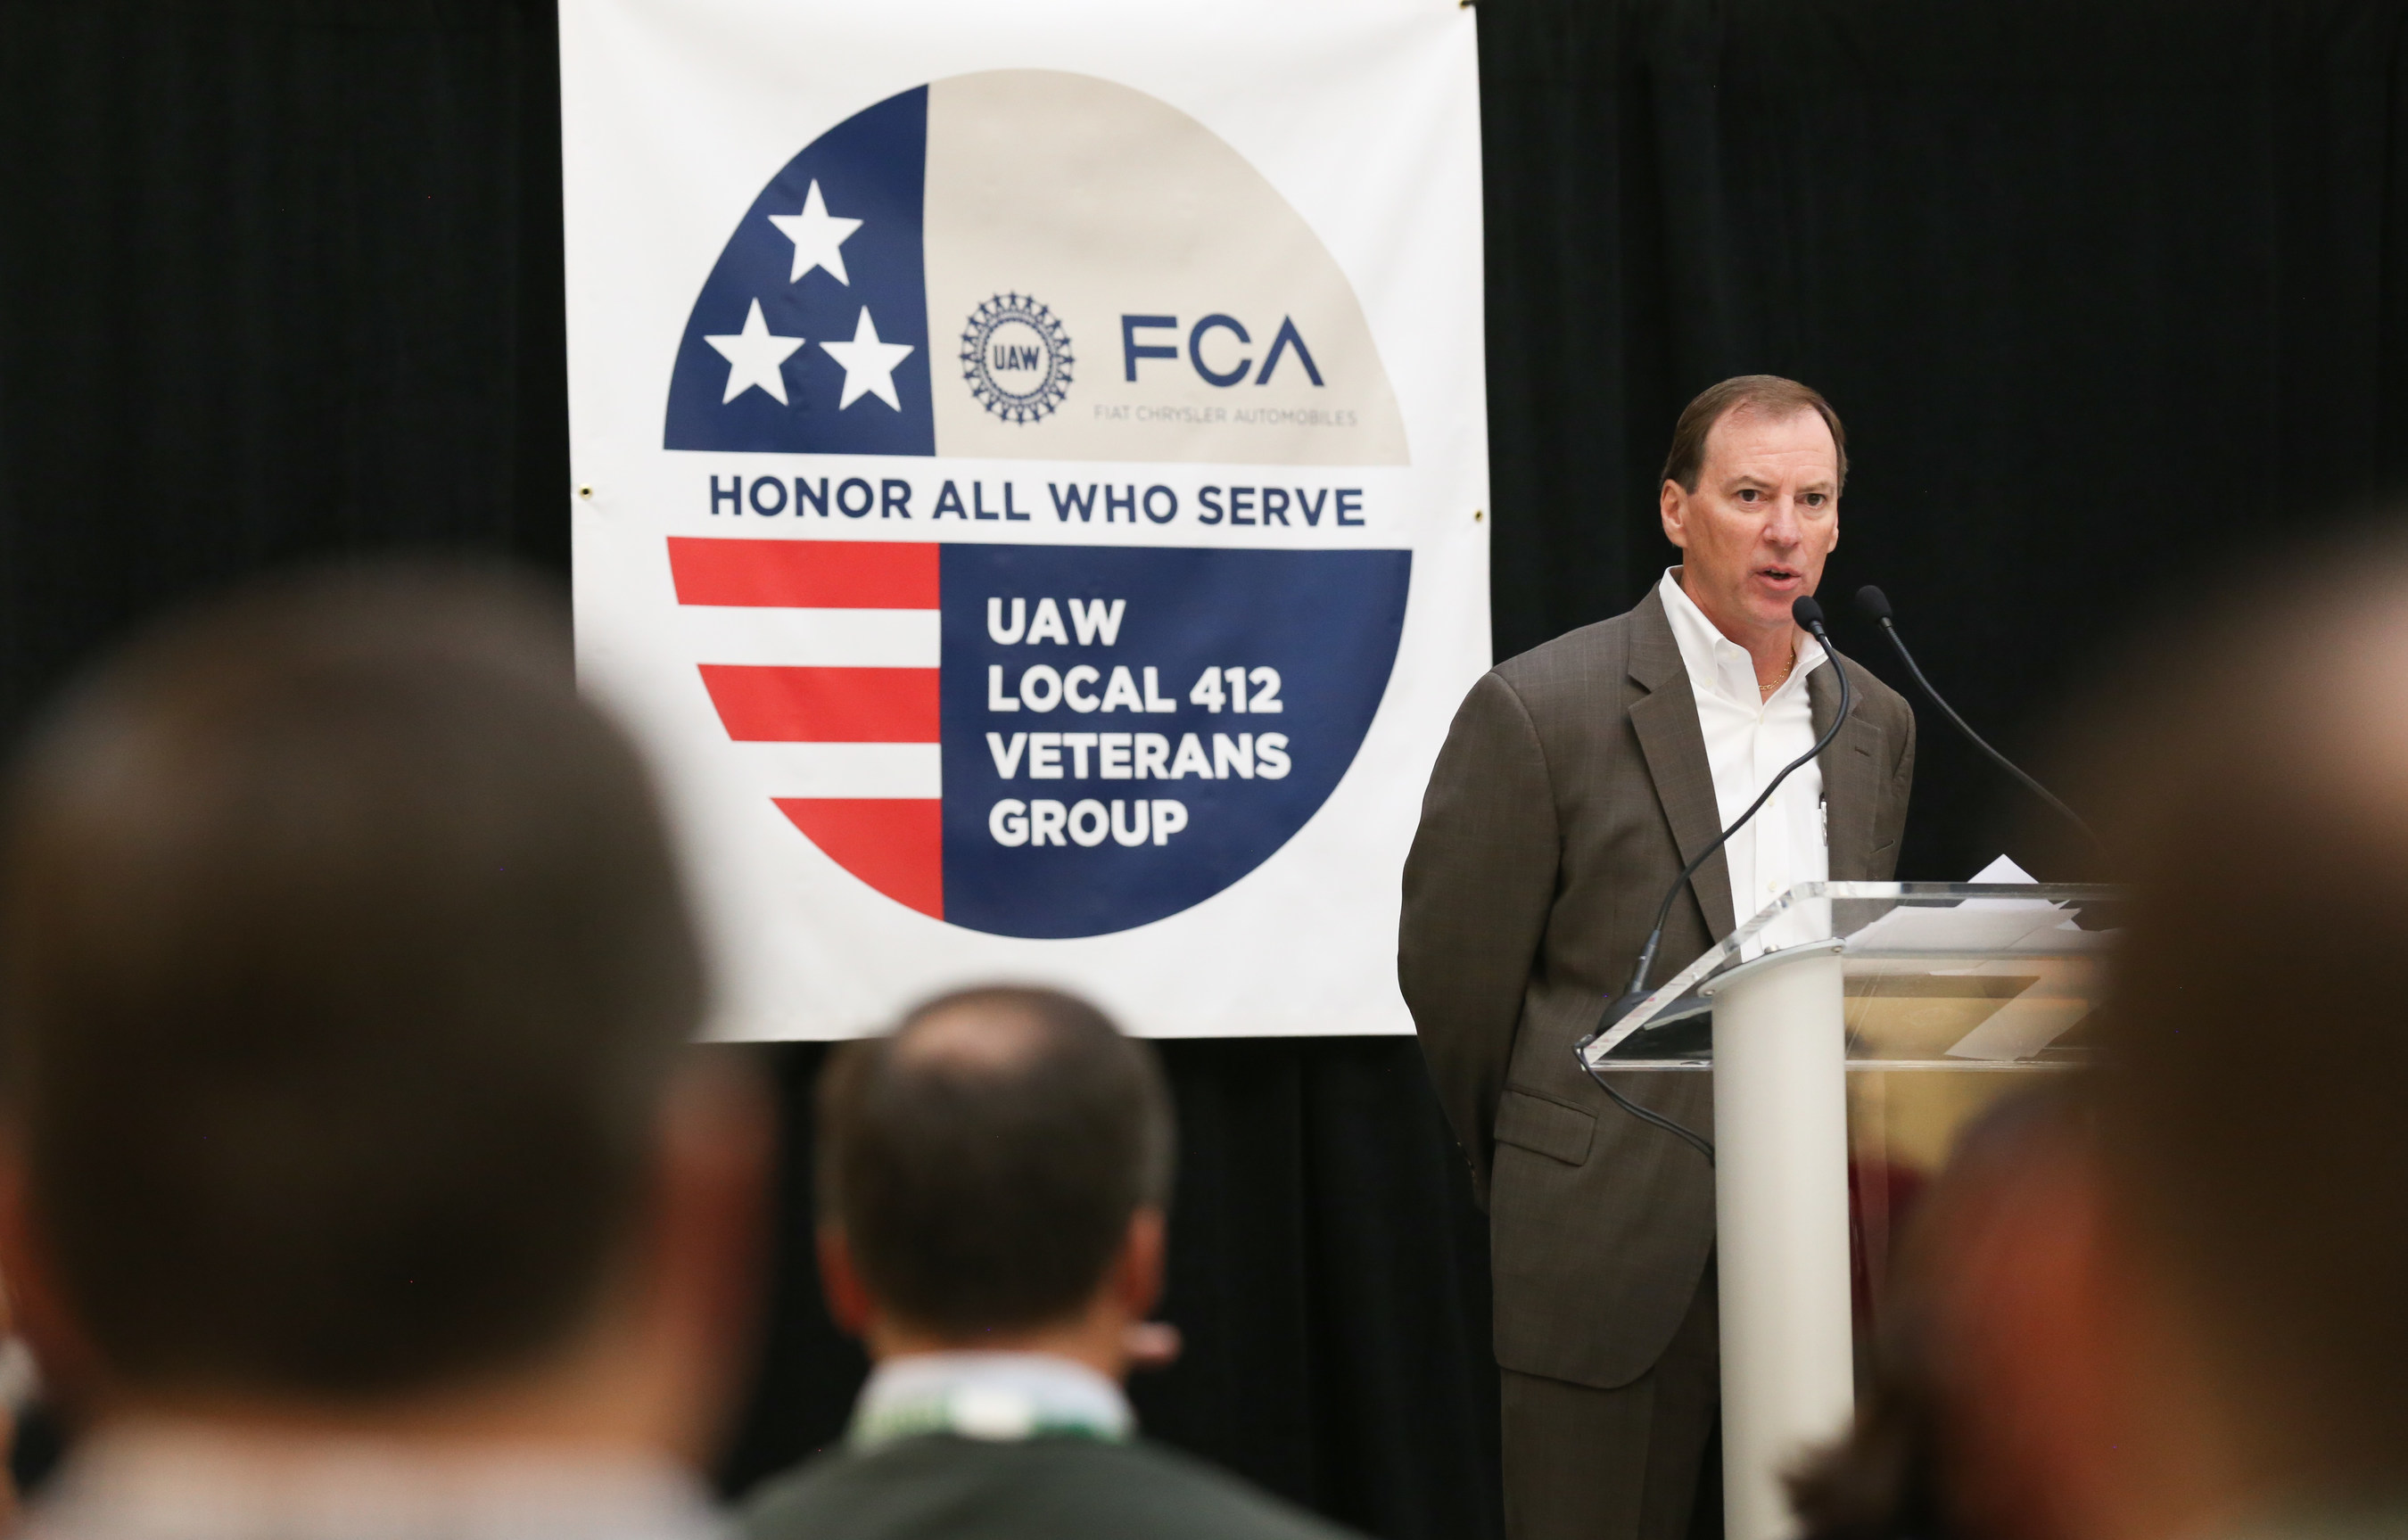 Glenn Shagena, Head of FCA US Employee Relations marked the Veteran's Day observance.